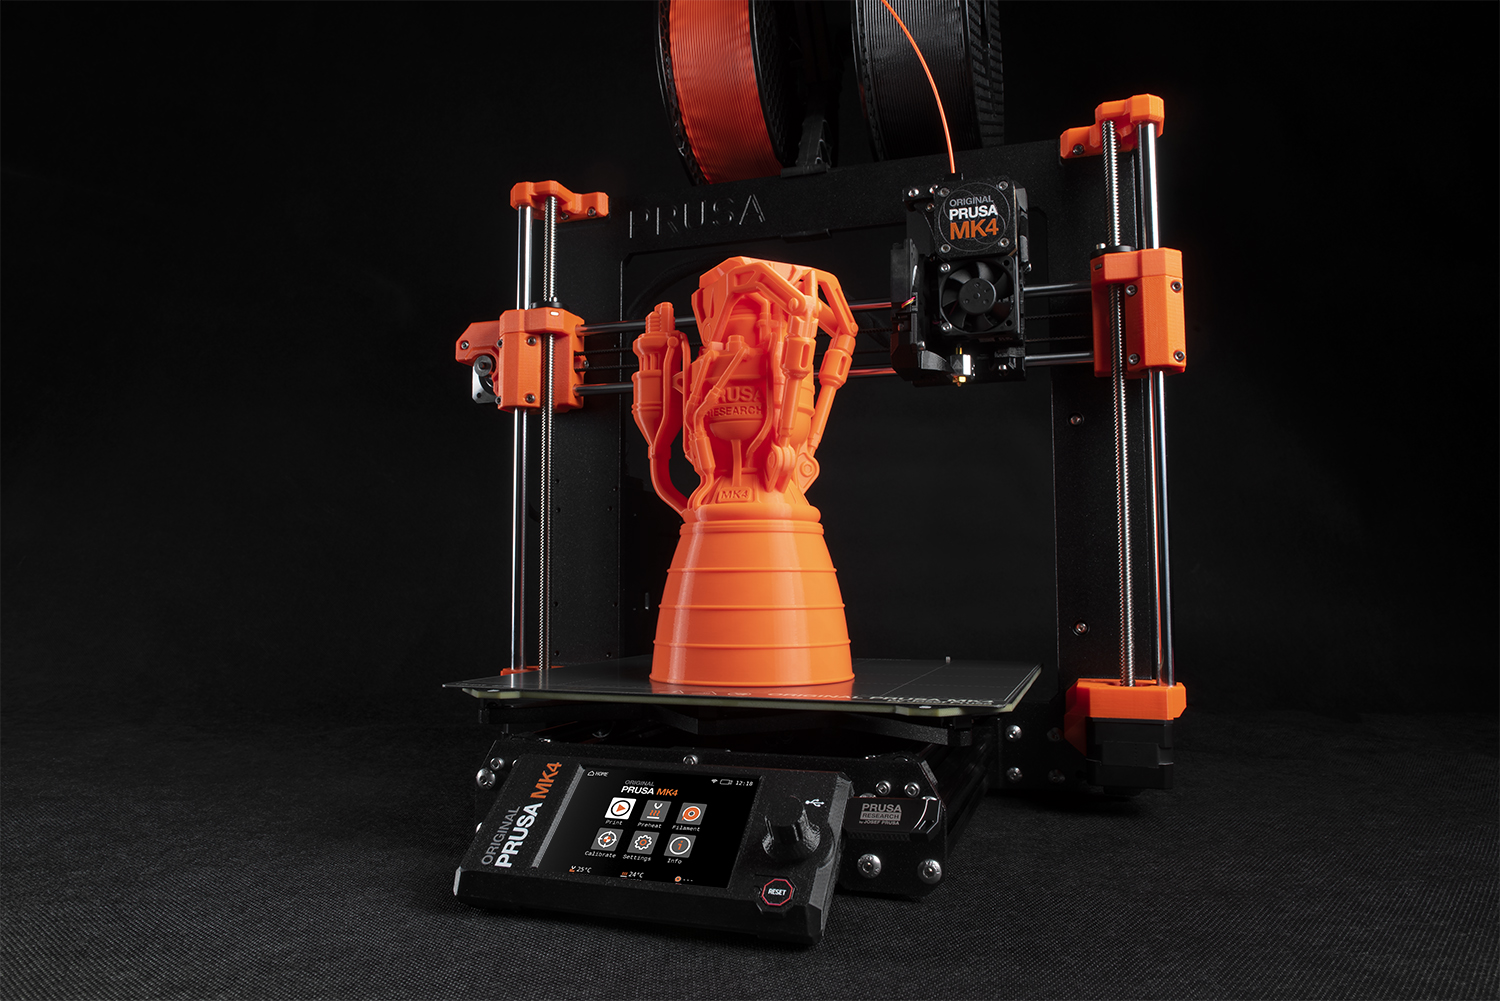 Original Prusa 3D printers directly from Josef Prusa